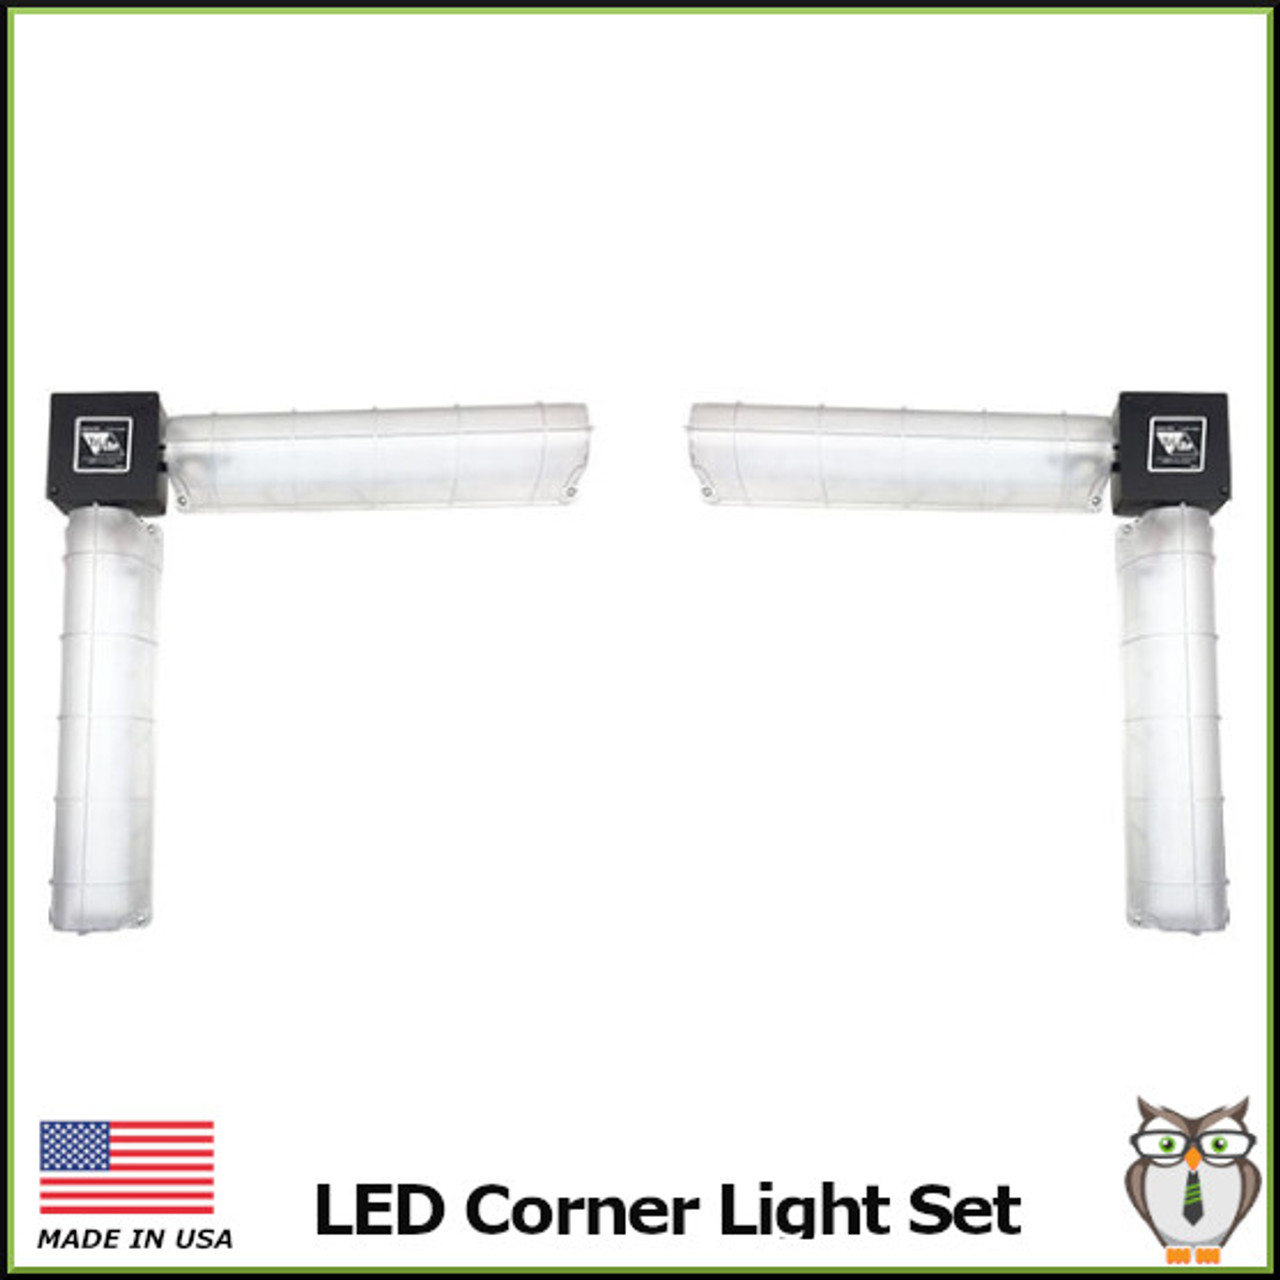 LED Corner Light Set - Not Lit